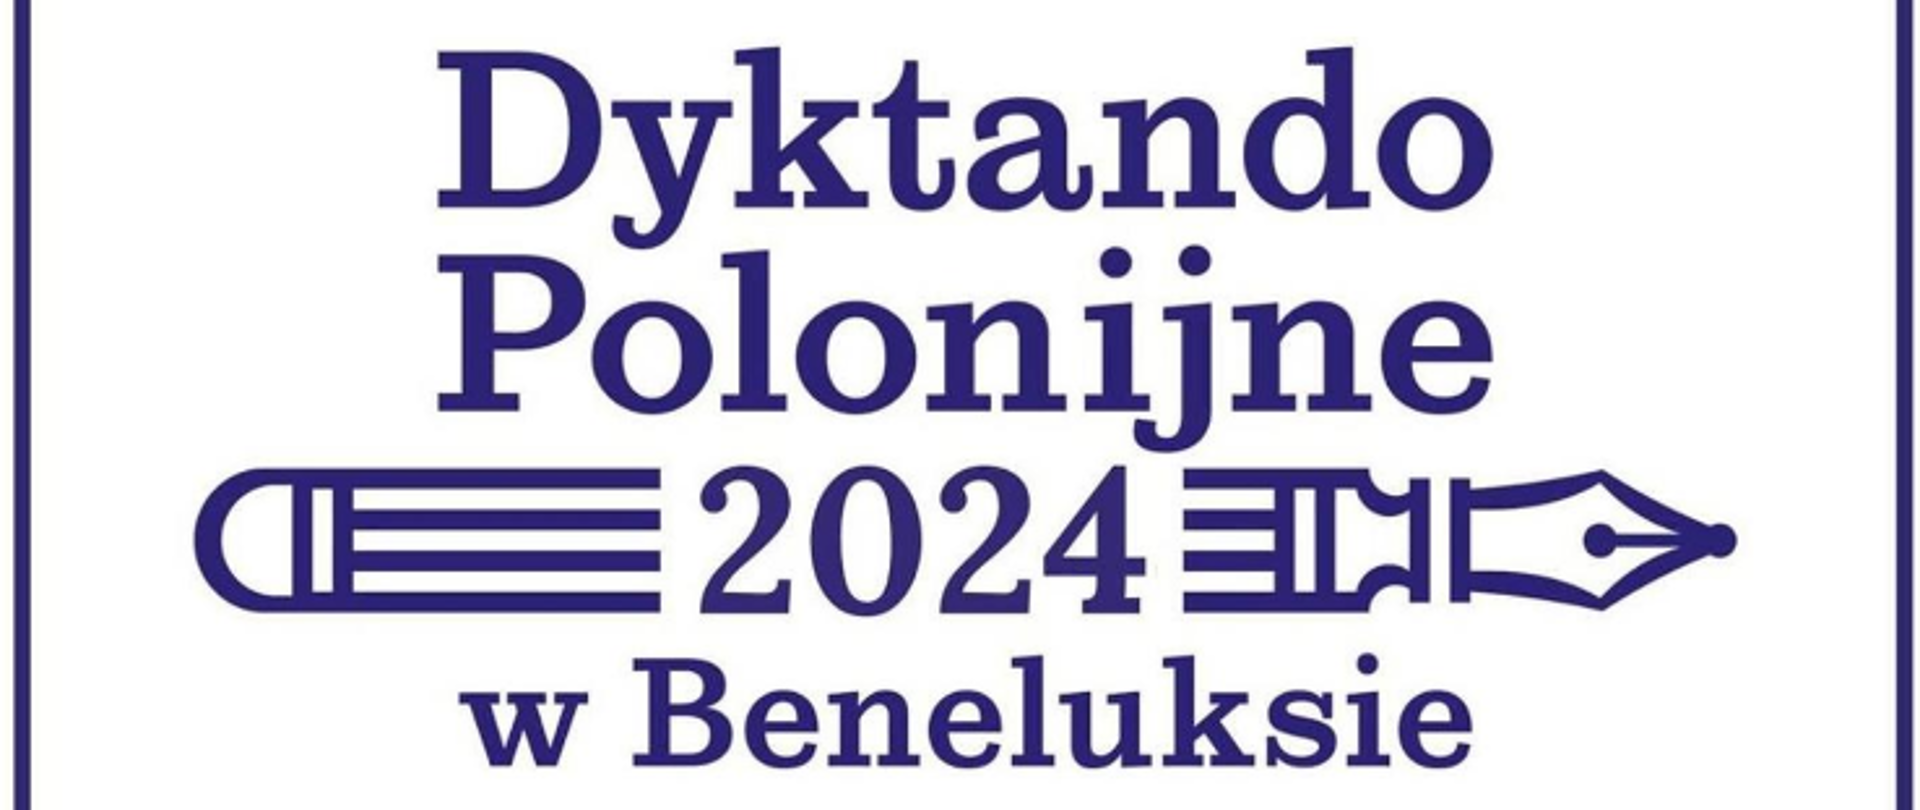 Dyktando polonijne 2024 